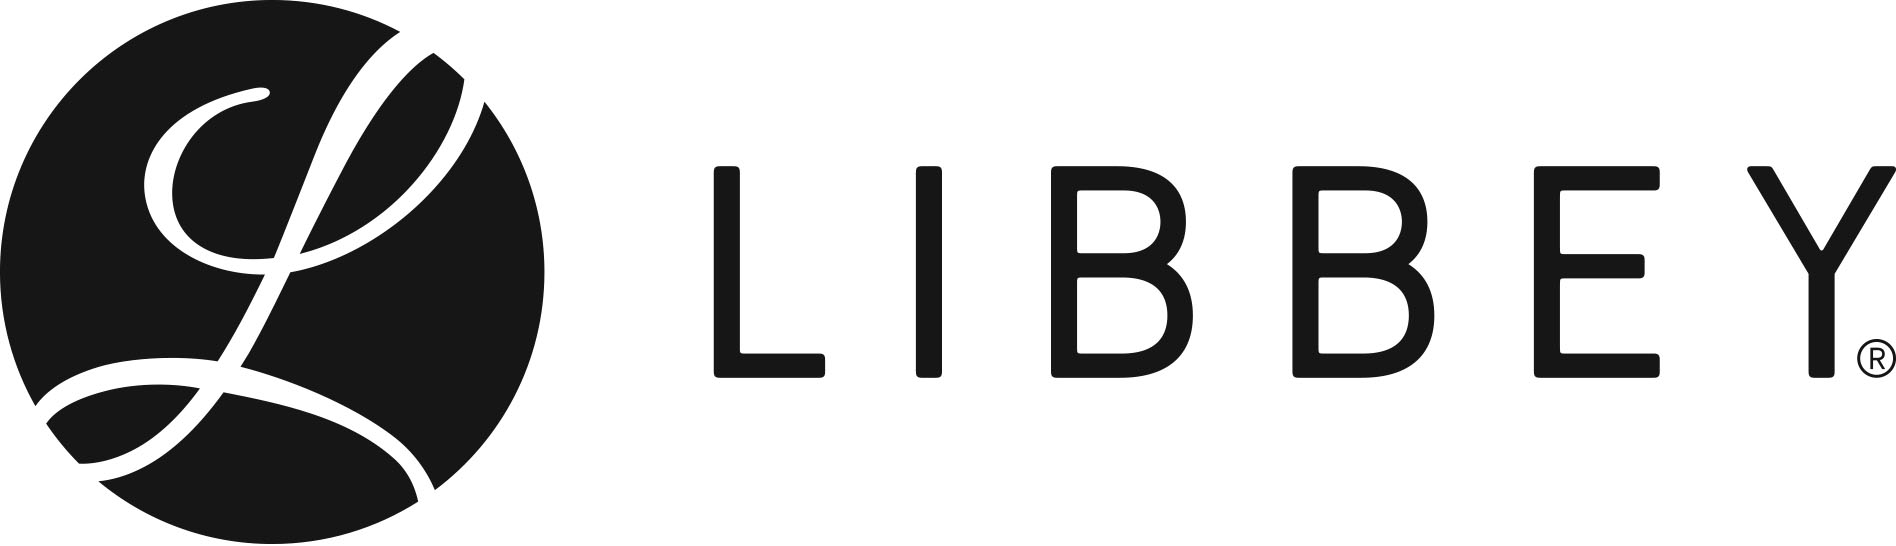 Libbey Glassware Logo